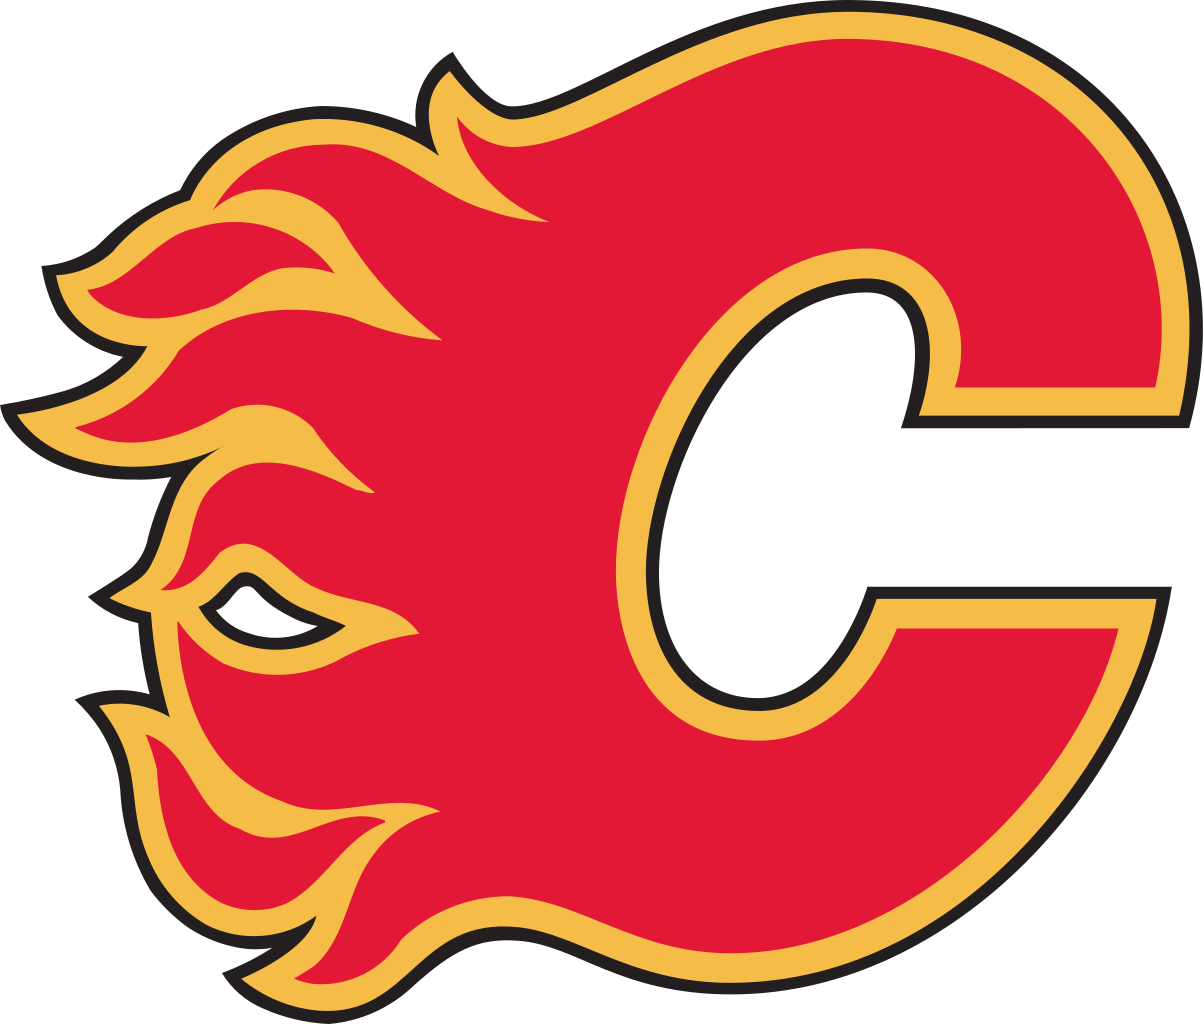 Calgary Sports And Entertainment Company - Calgary Flames Logo (1203x1024)